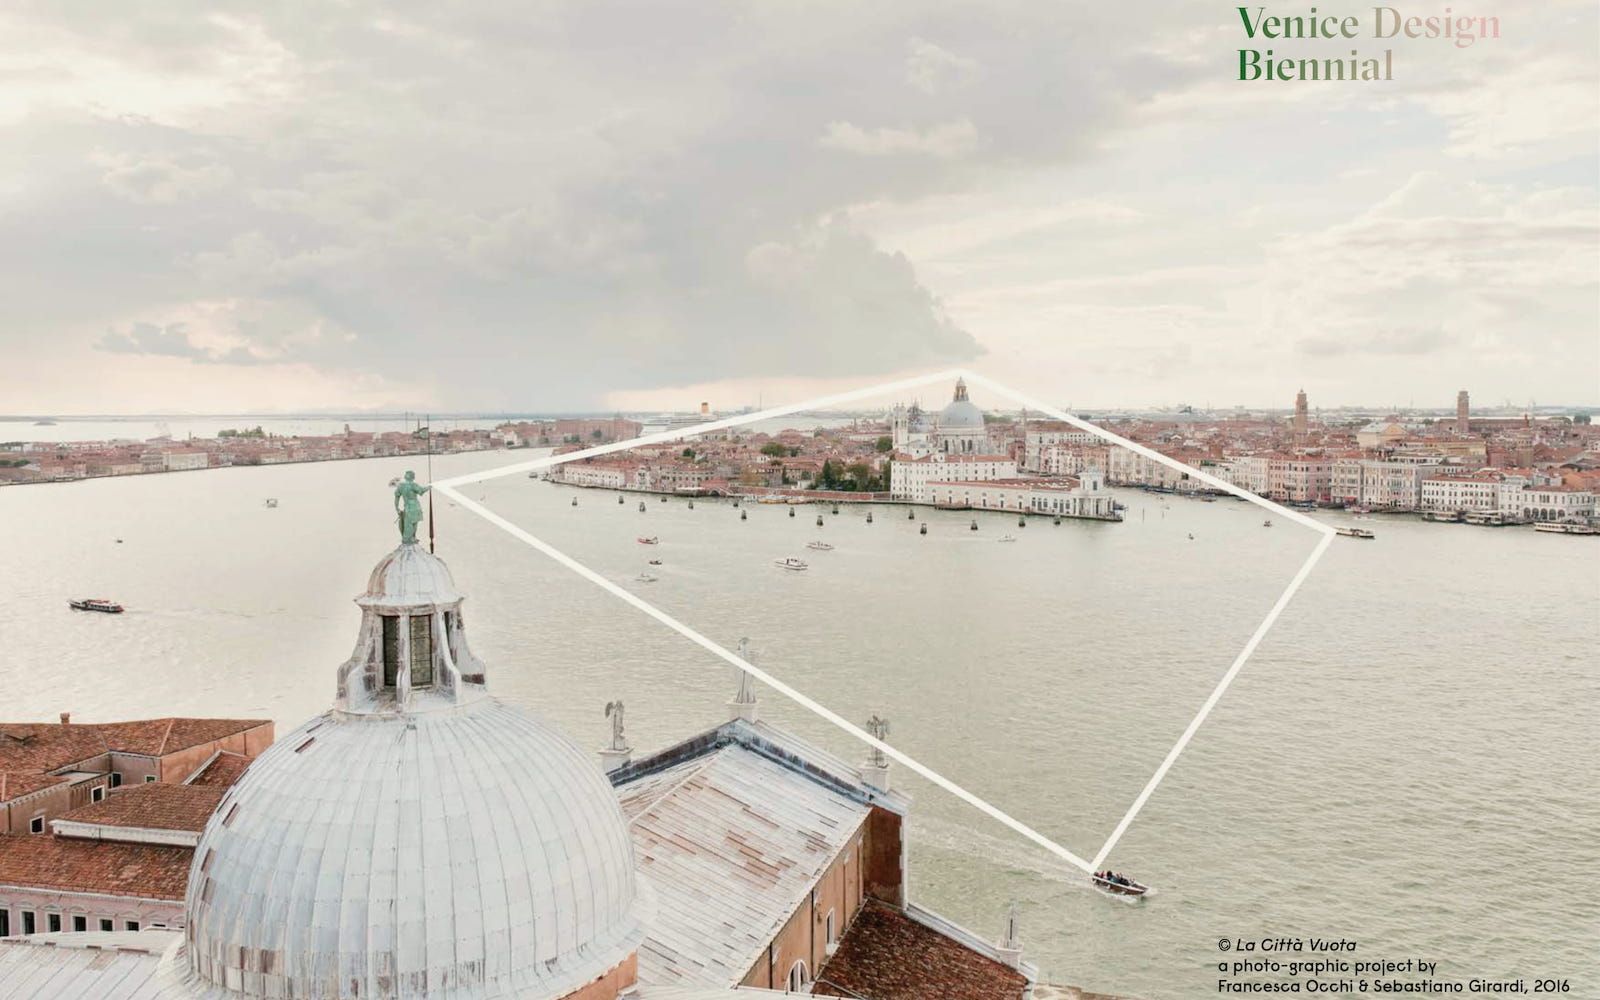 The new identity of Venice Biennial The 2020 edition explores the concept of self-representation through design